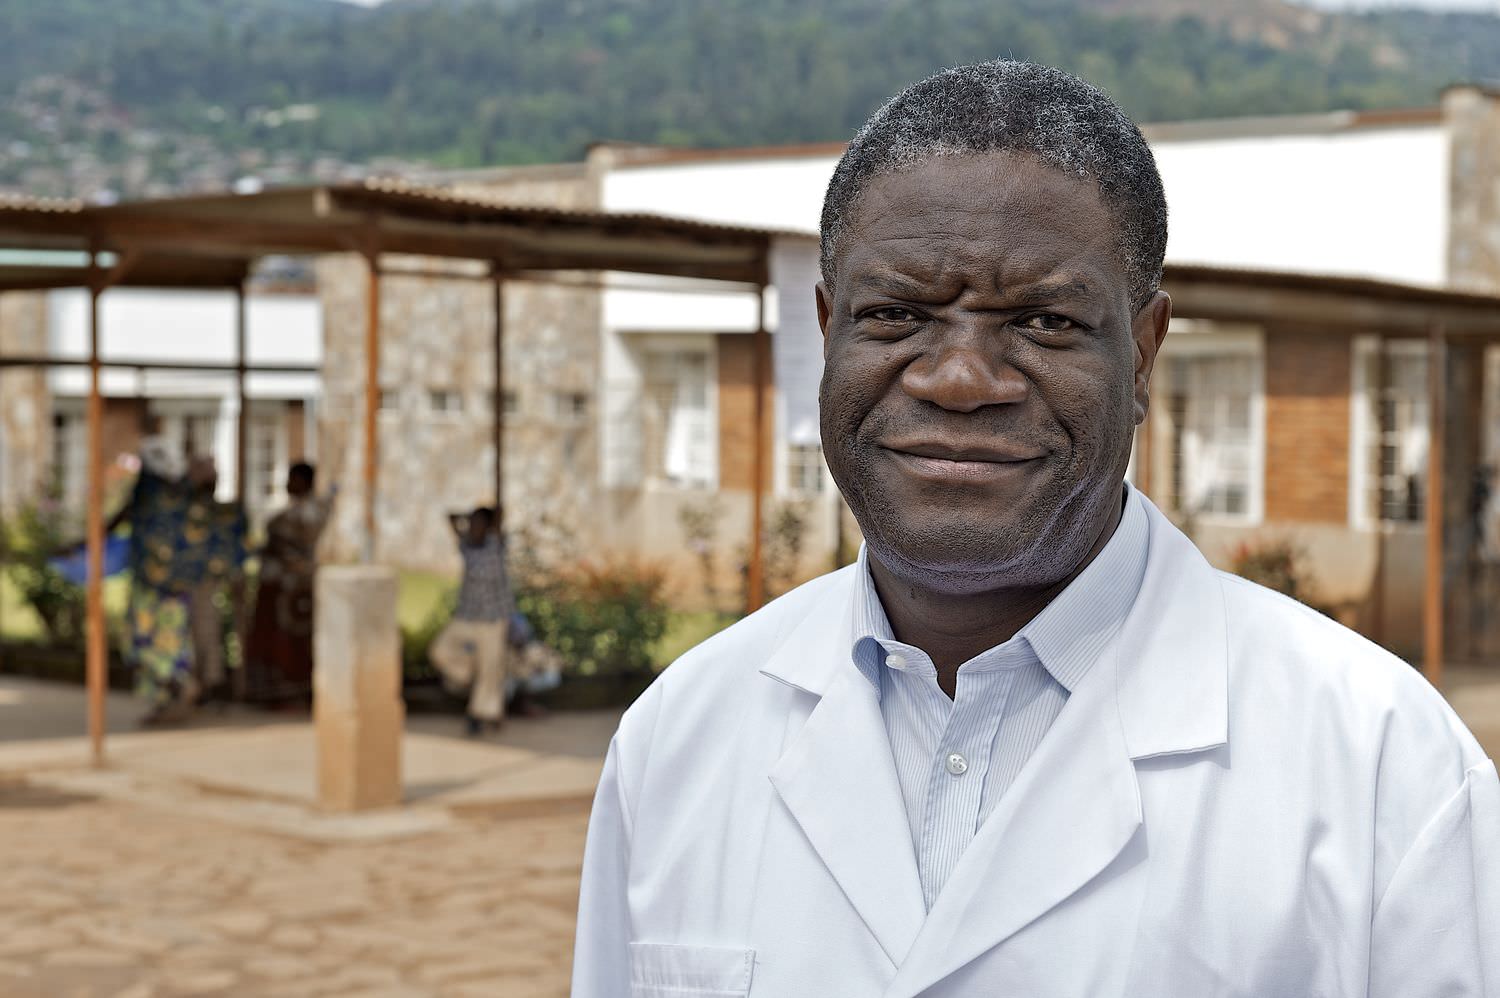 Médico congolês repara corpo e esperança de vítimas de estupro